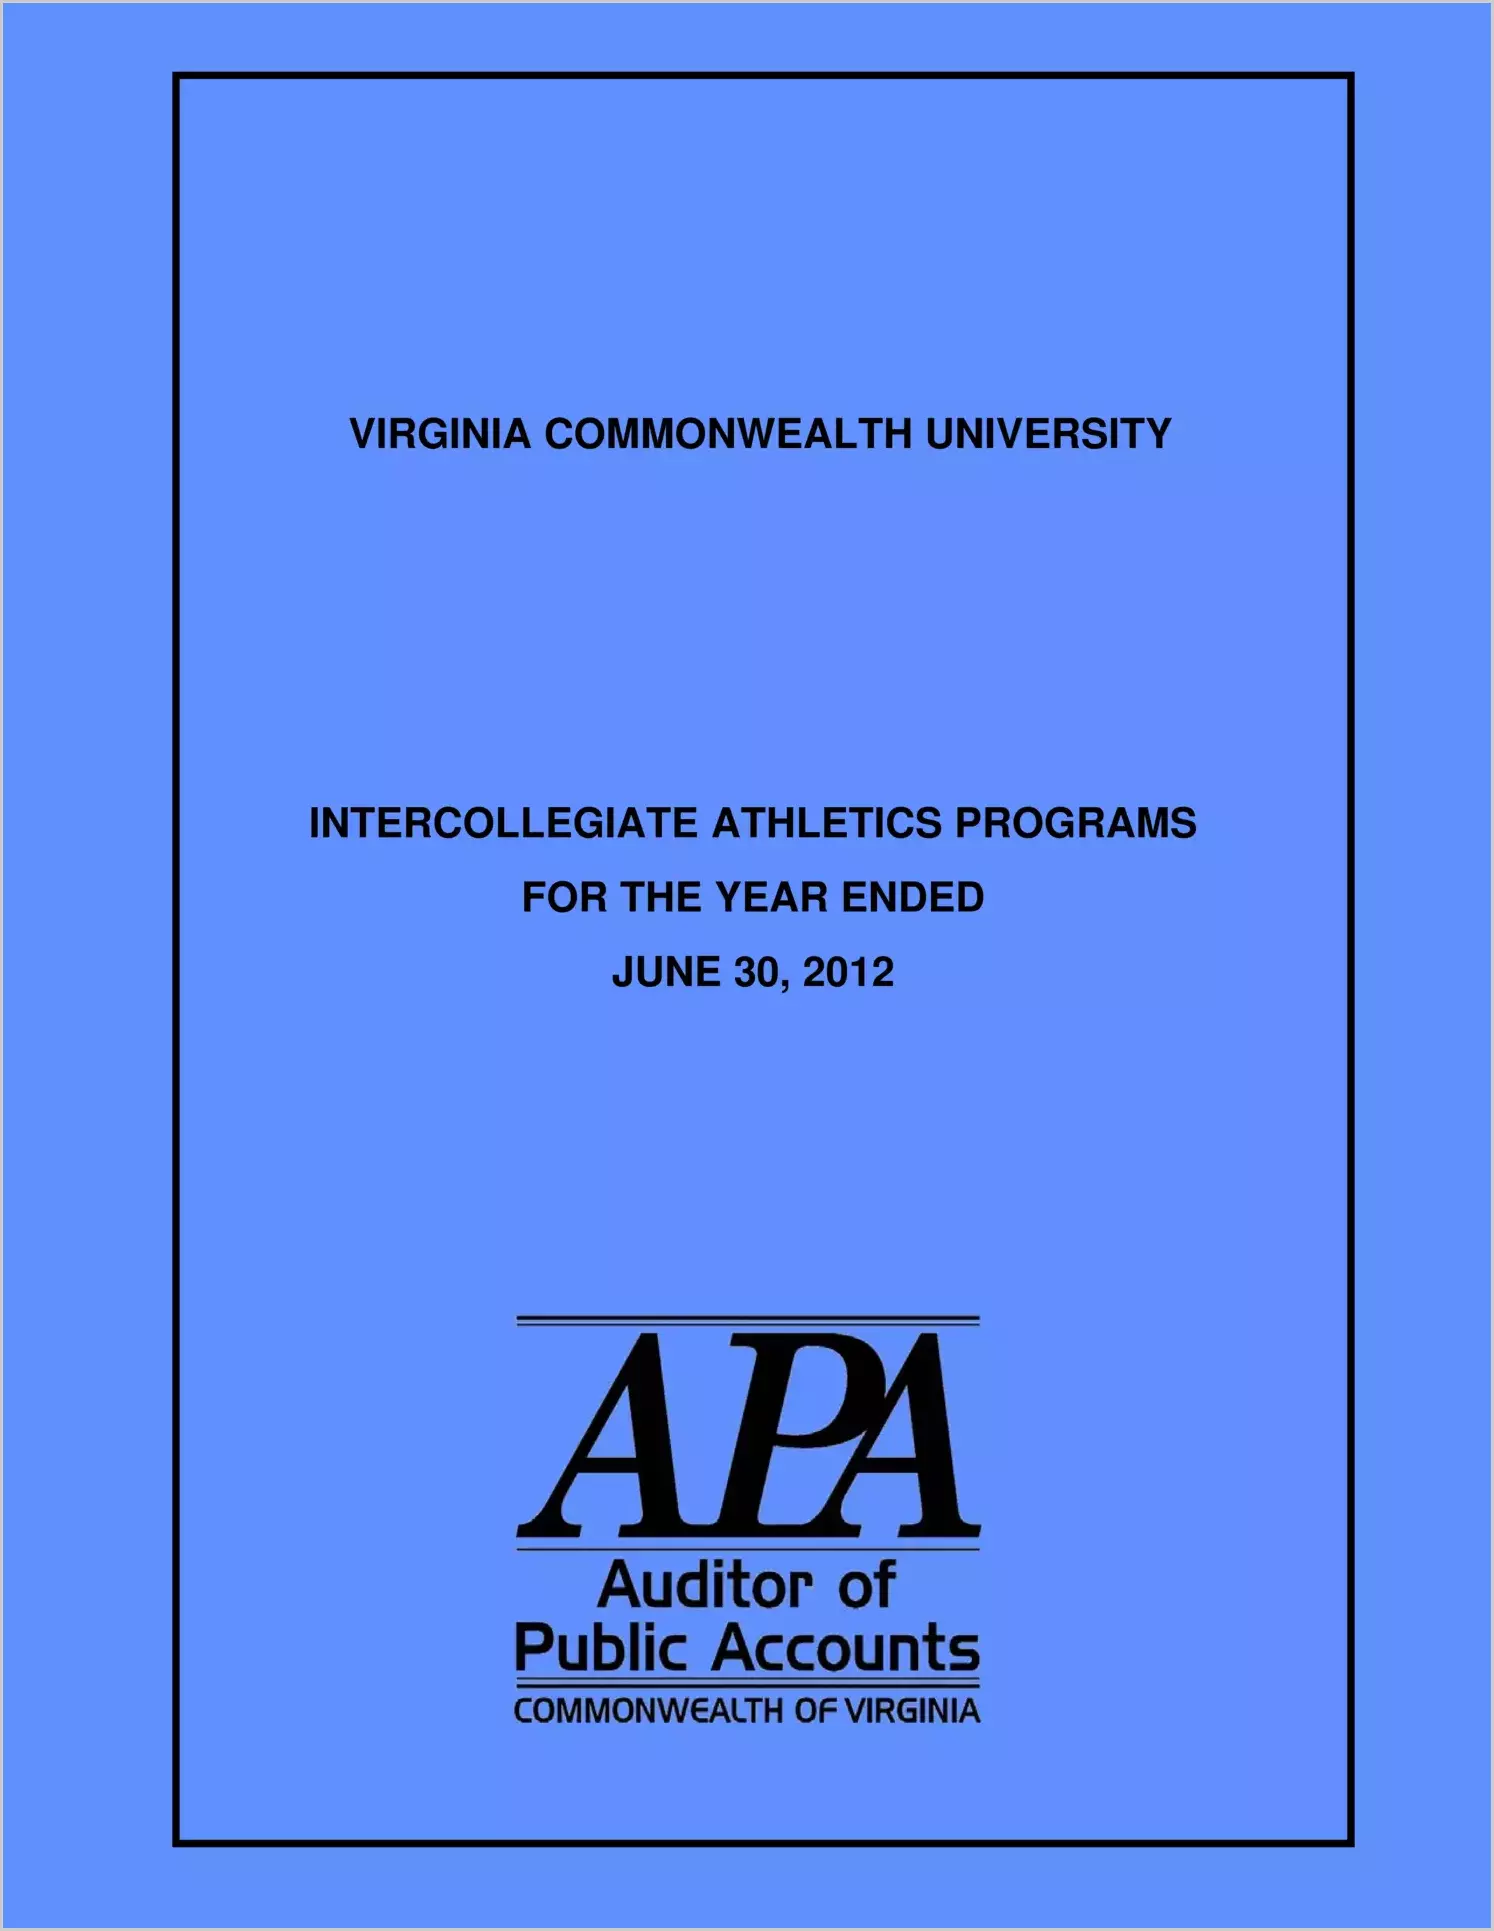 Virginia Commonwealth University Intercollegiate Athletics Programs for the year ended June 30, 2012